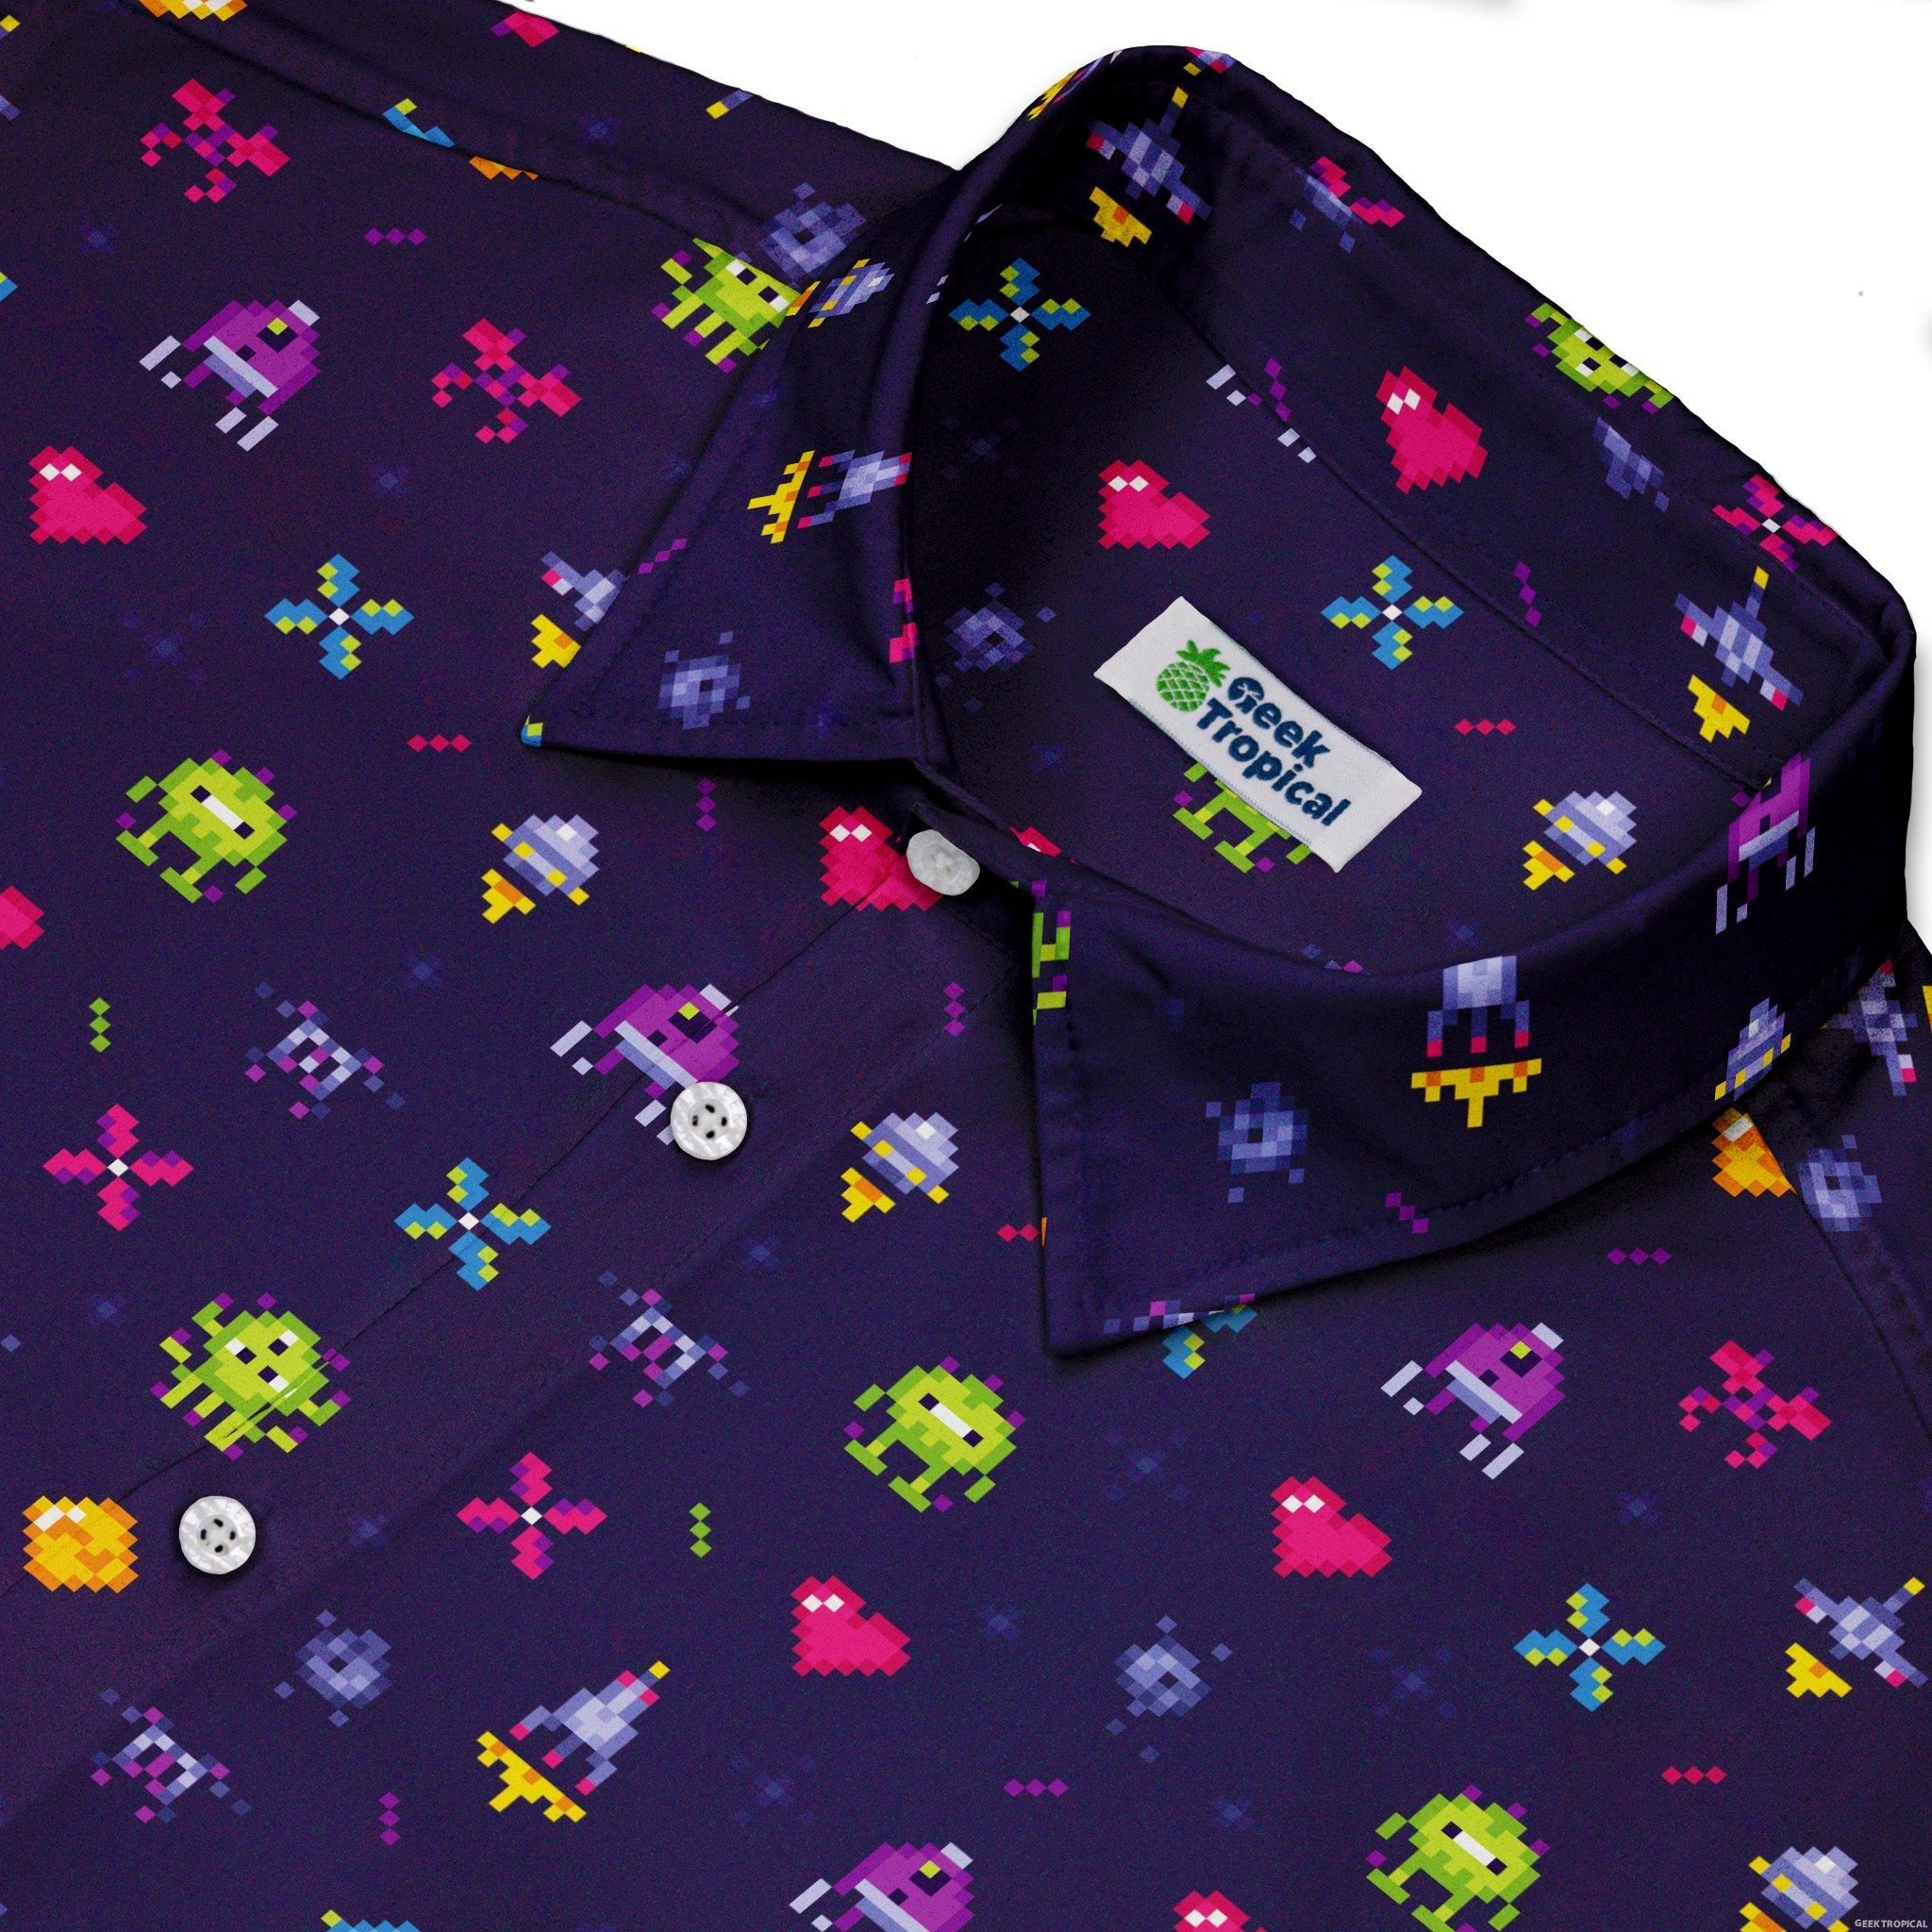 Pixel Art Arcade Video Game Purple Button Up Shirt - adult sizing - video game arcade print -